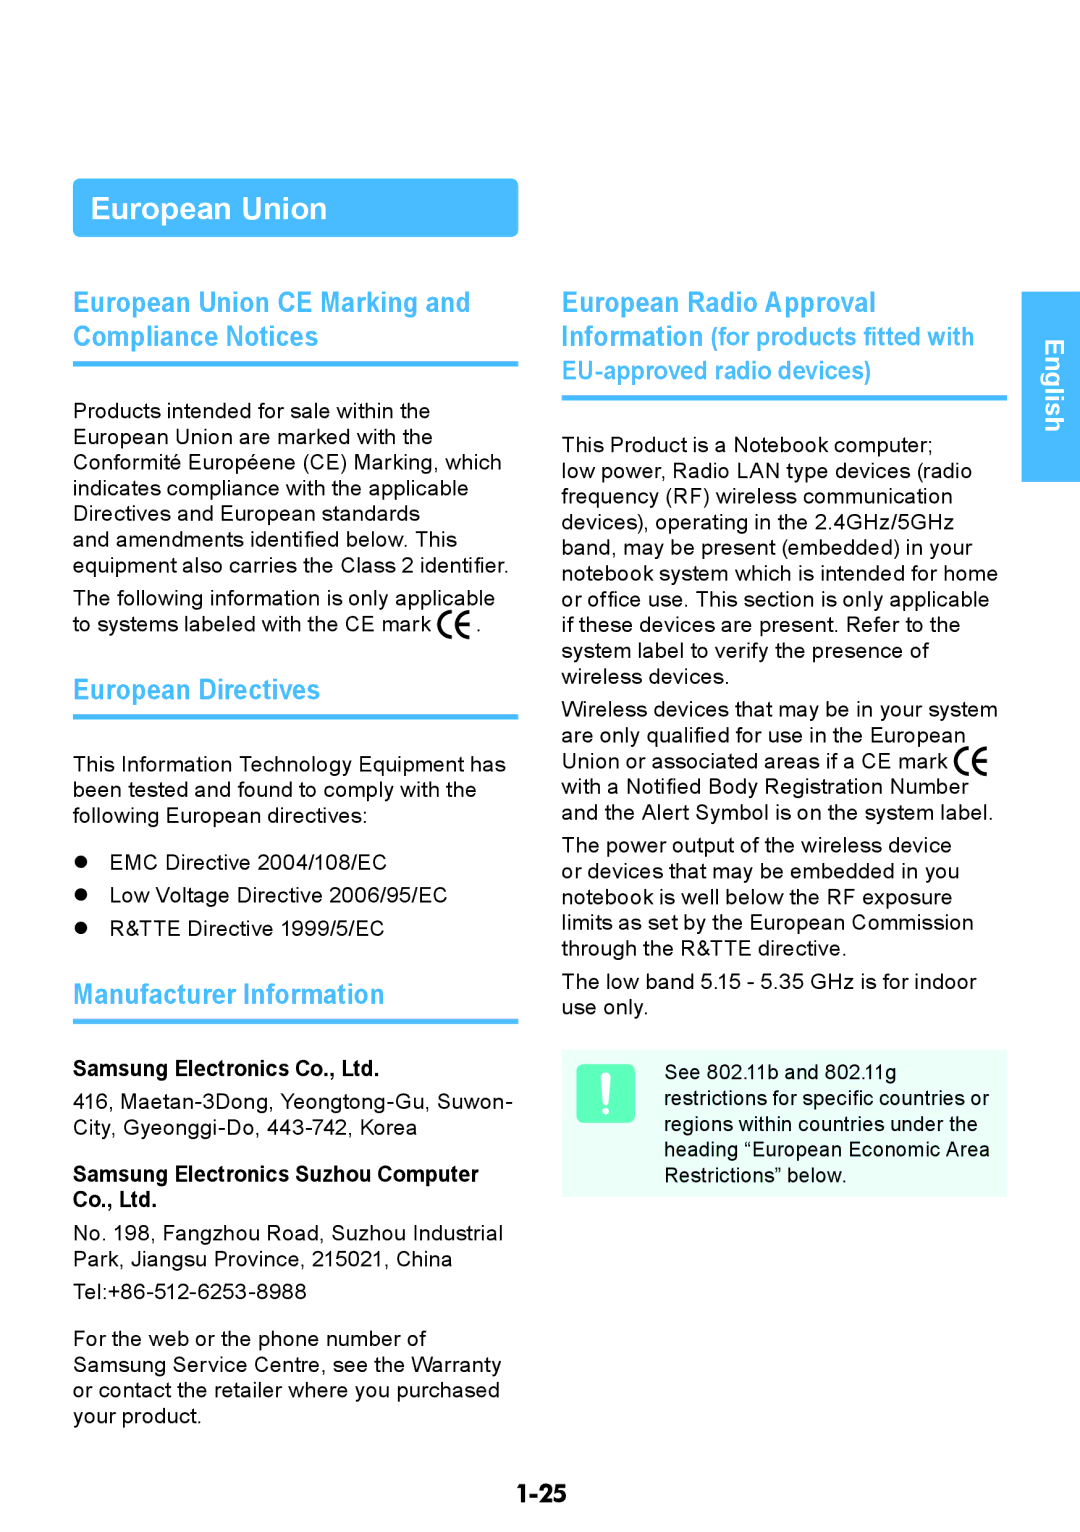 Samsung NP-RV408-A01RU European Union CE Marking and Compliance Notices, European Directives, Manufacturer Information 